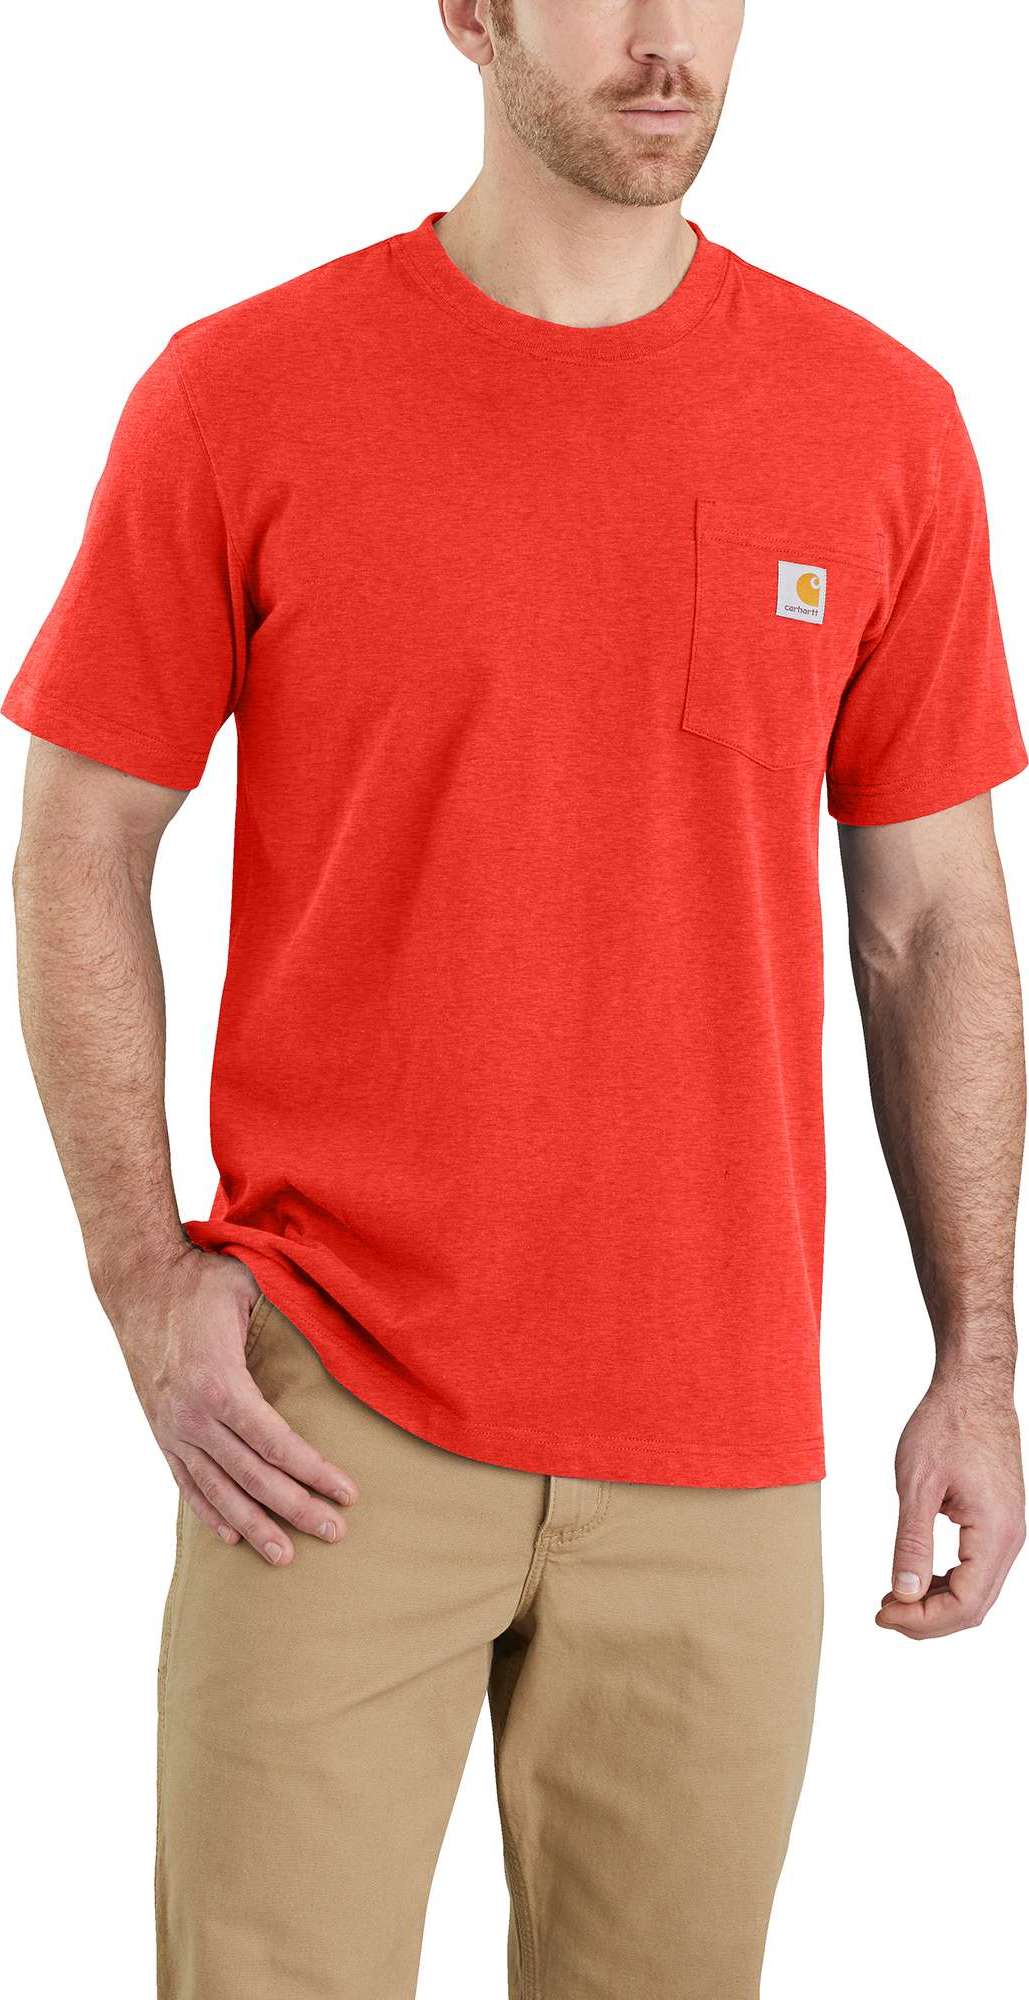 Men's Workwear Pocket S/S T-Shirt CURRANT HEATHER